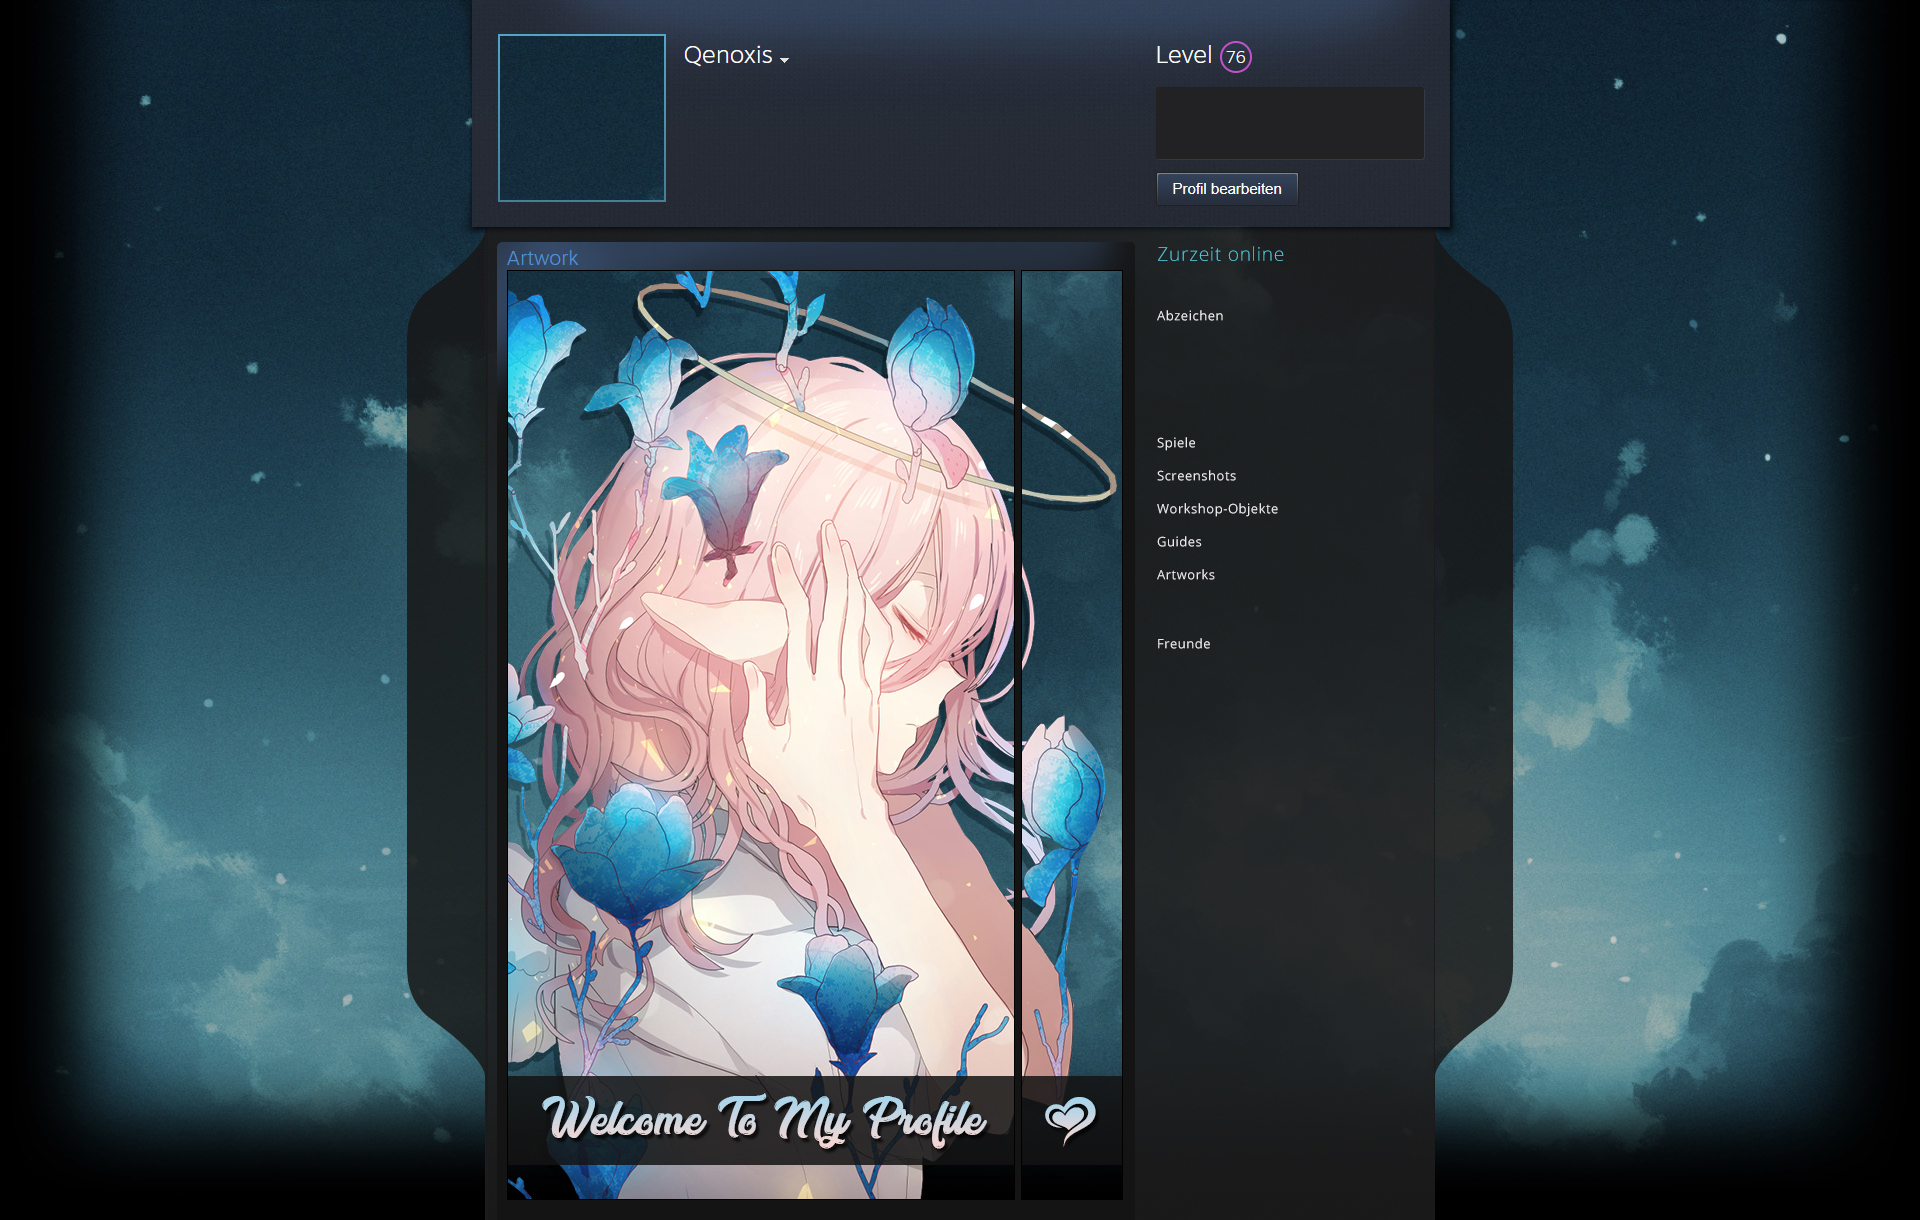 Steam's new default background :: Artwork Profiles